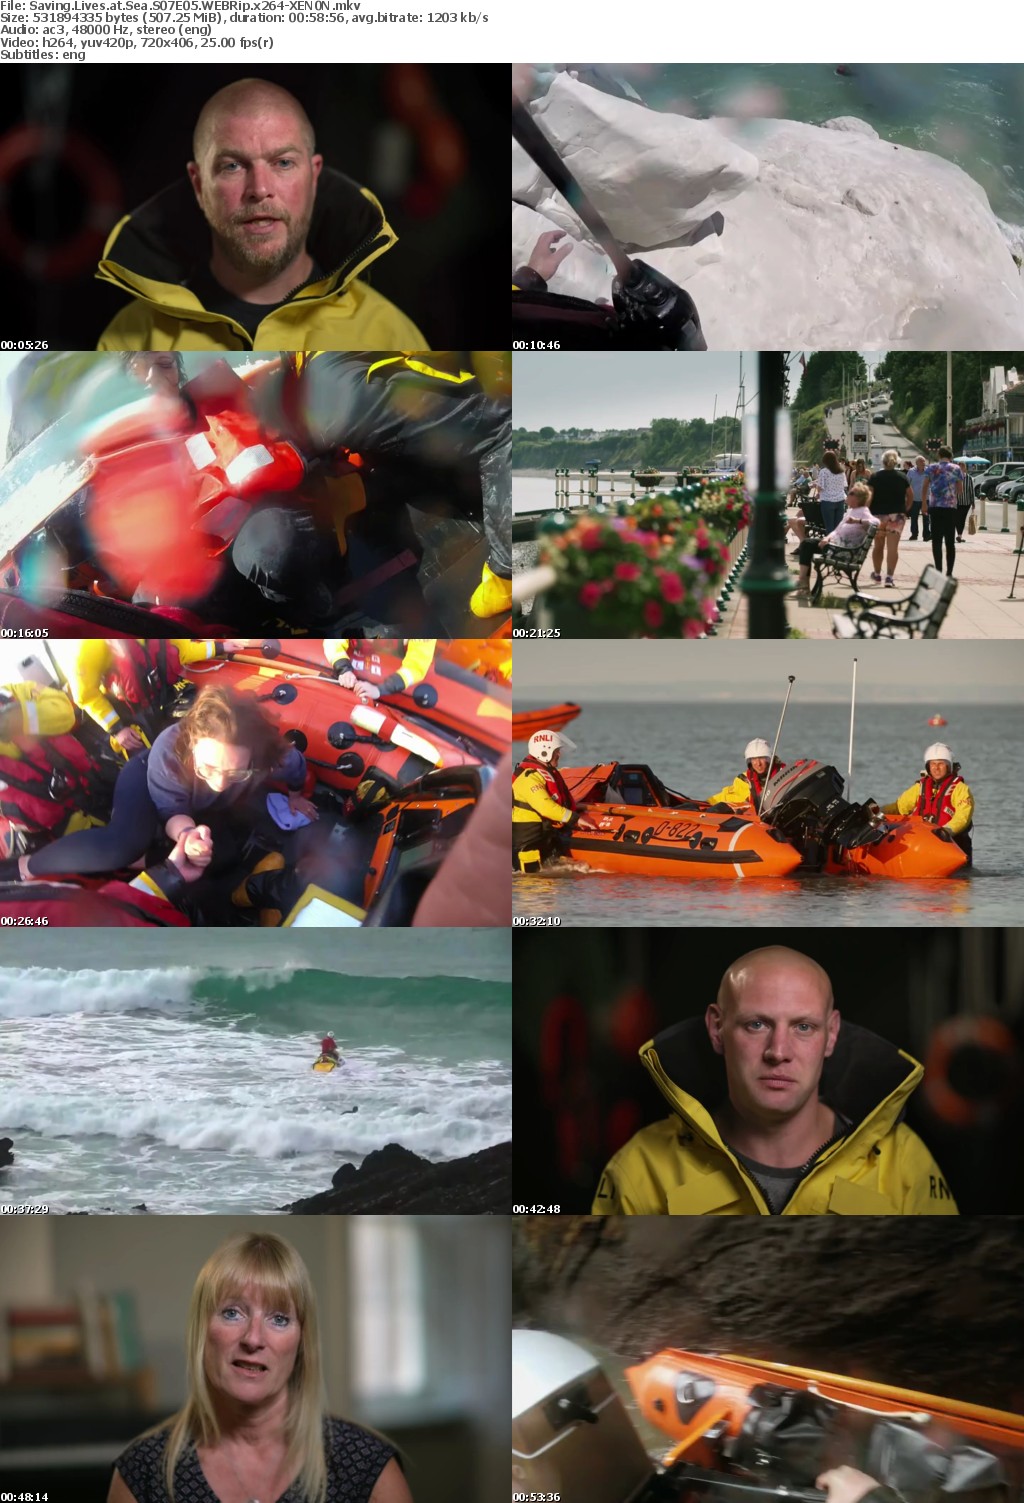 Saving Lives at Sea S07E05 WEBRip x264-XEN0N